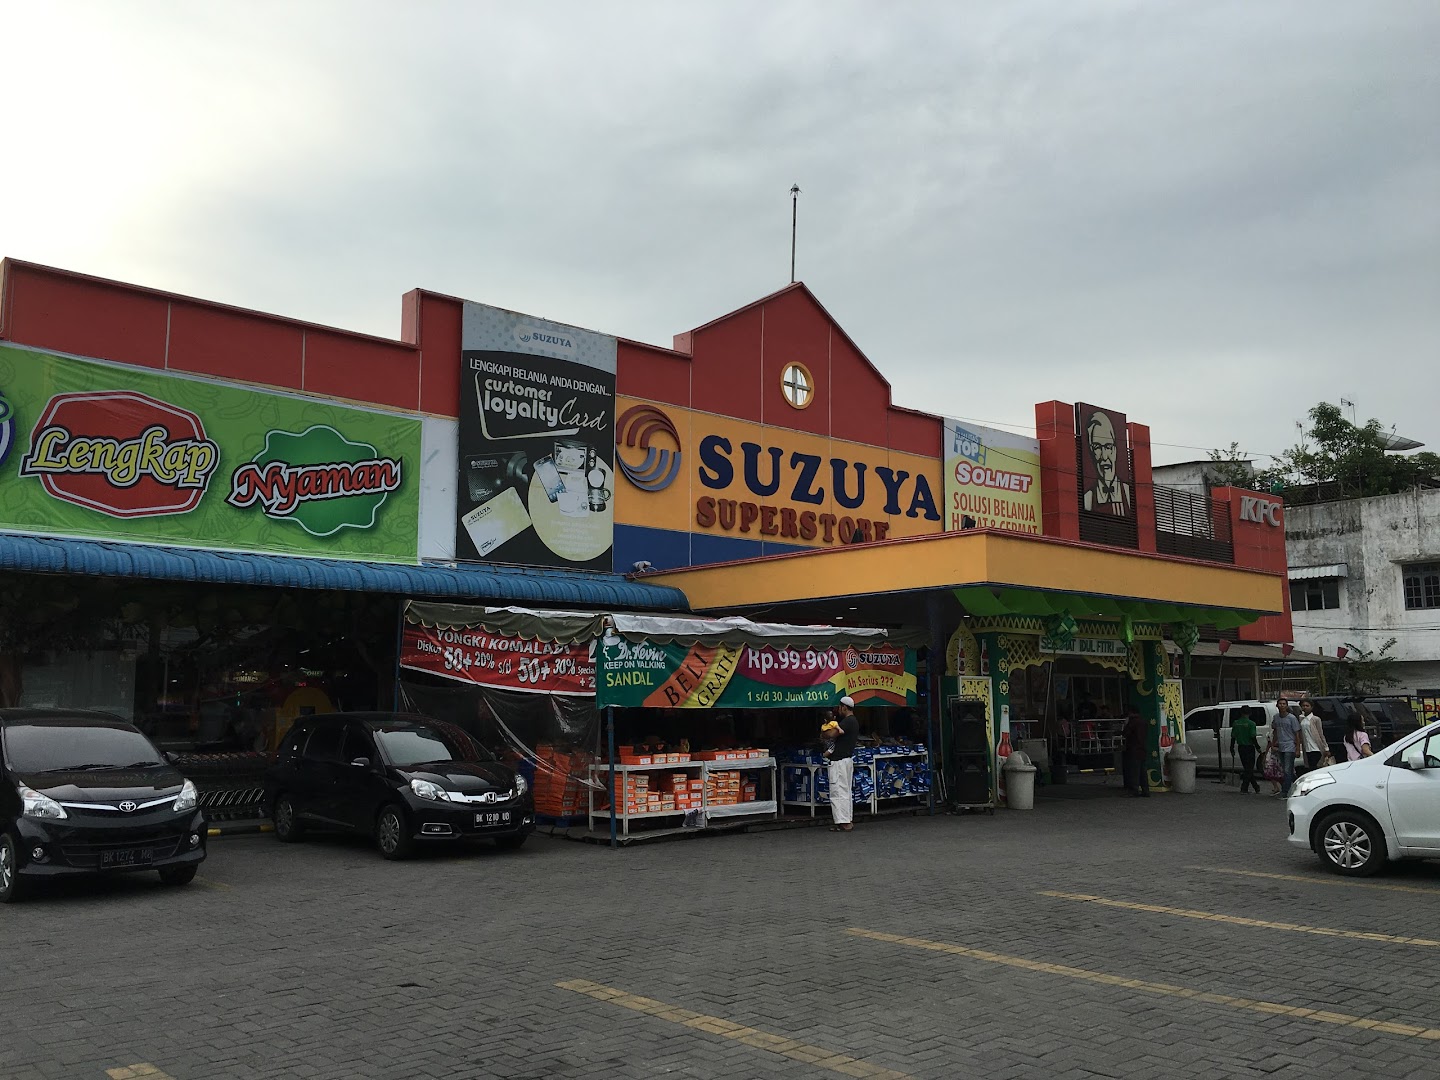 Gambar Suzuya Superstore Kampung Baru Medan